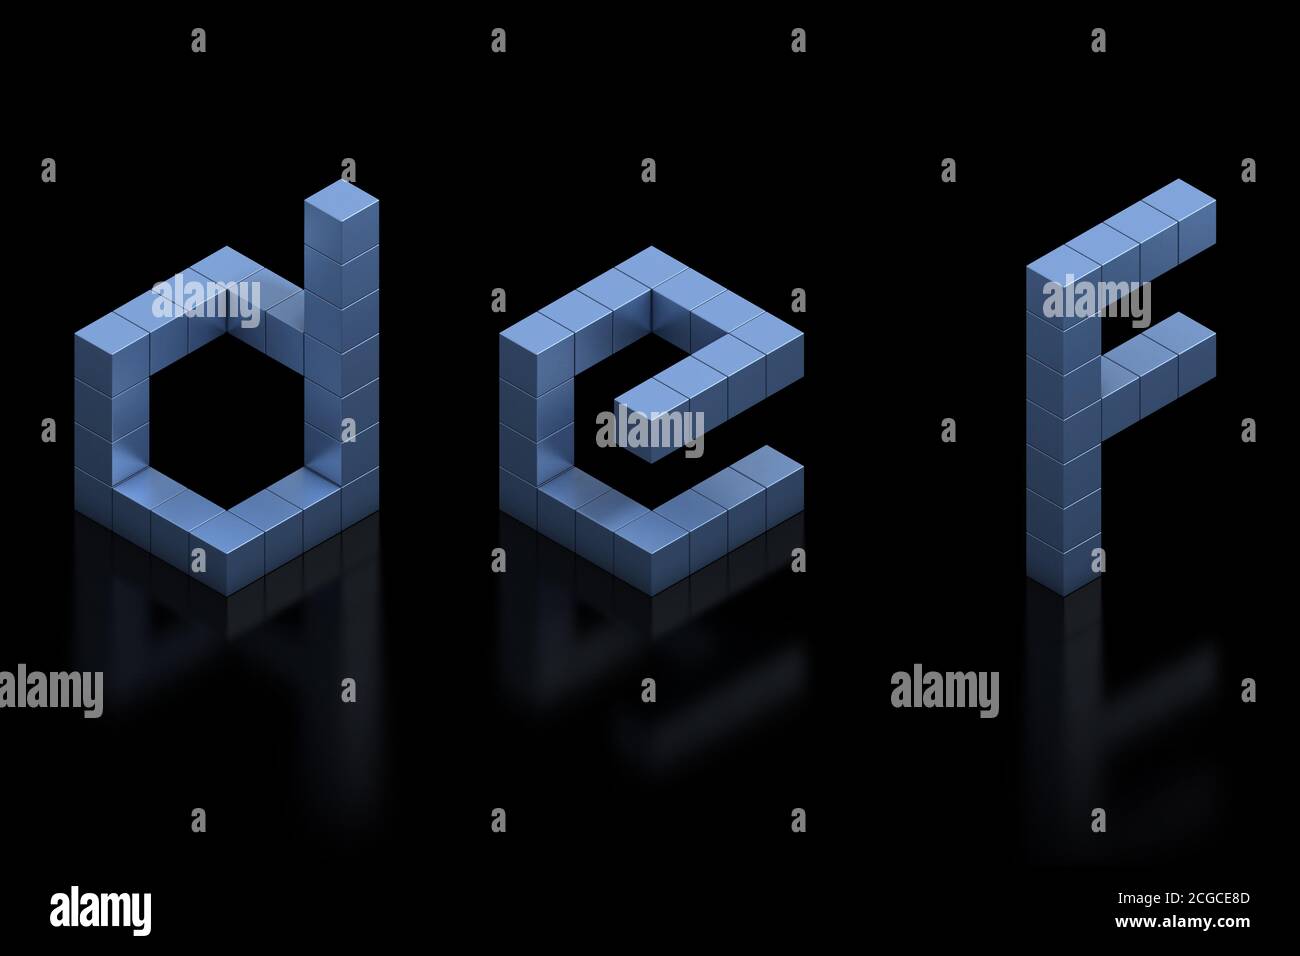 lettere cubiche con font 3d d e f Foto stock - Alamy